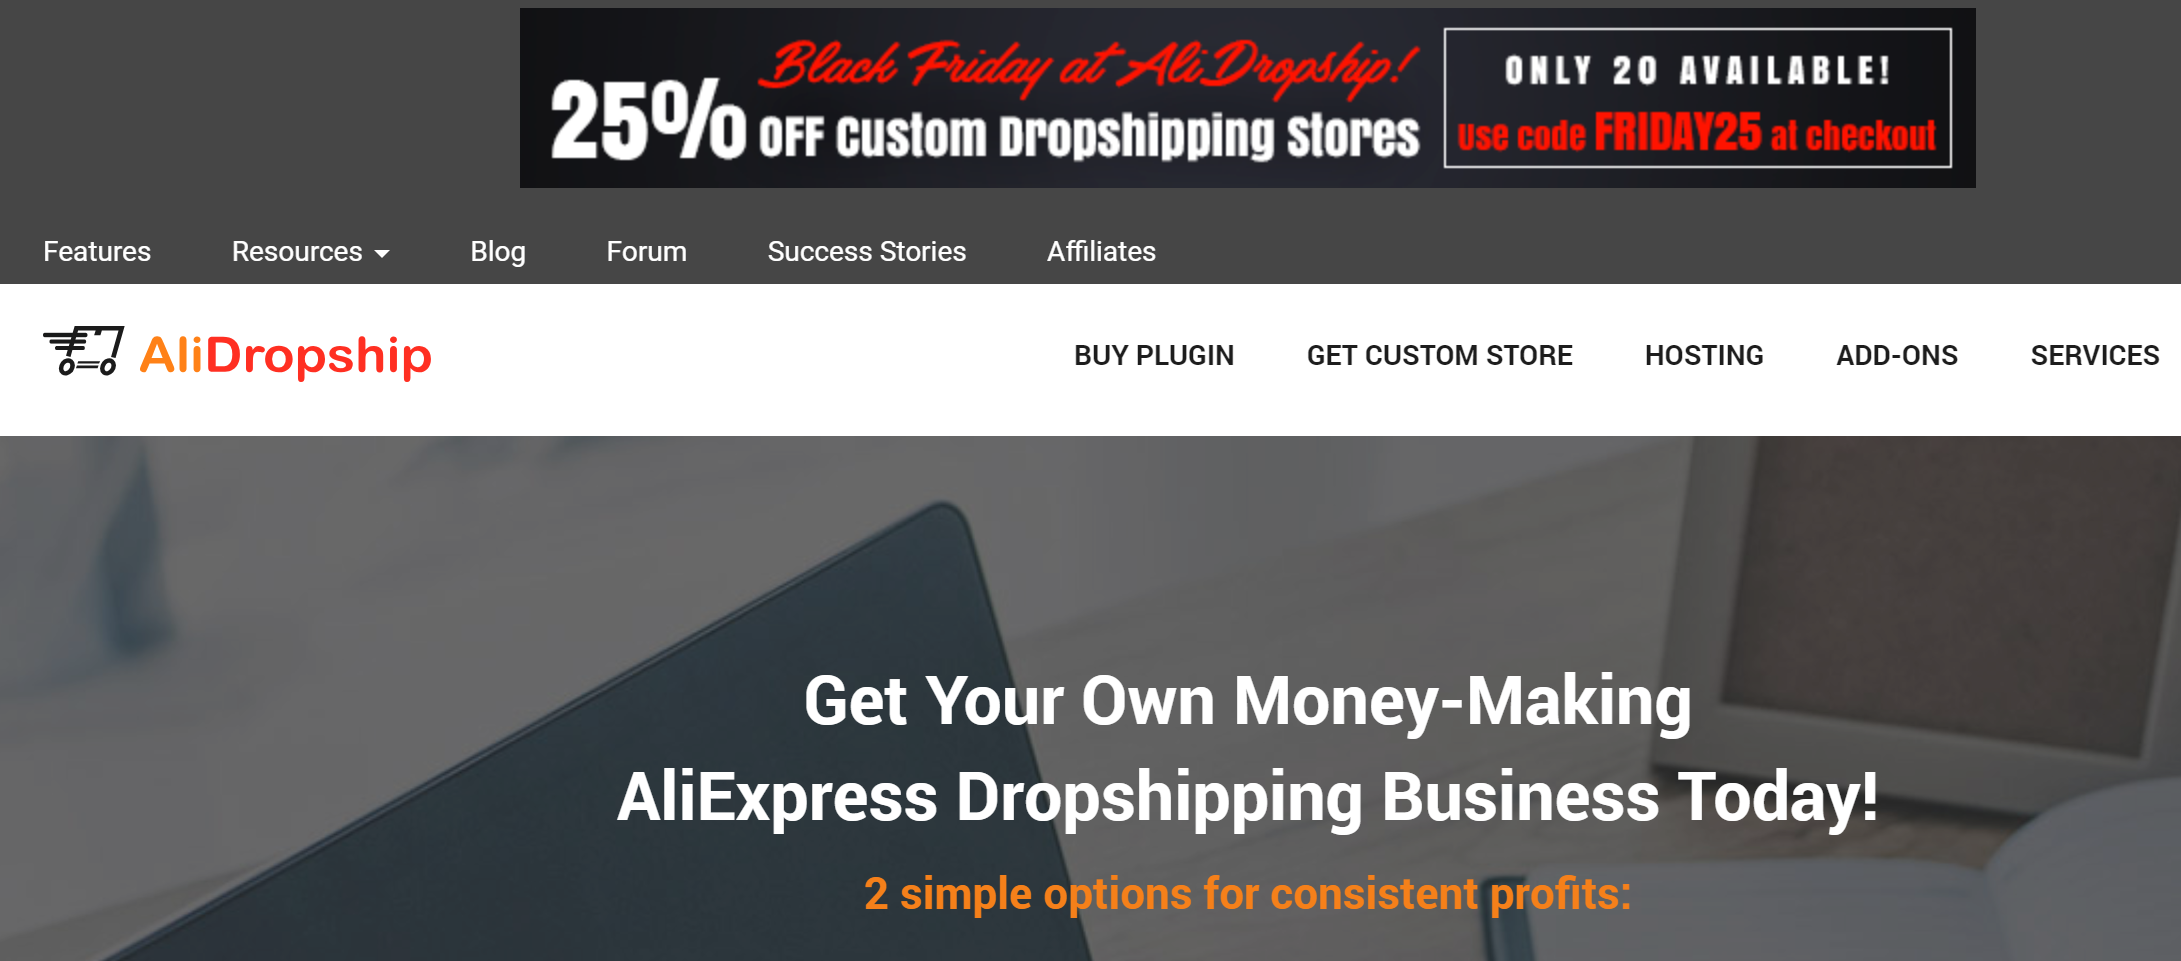 Alidropship black friday sale discount coupon